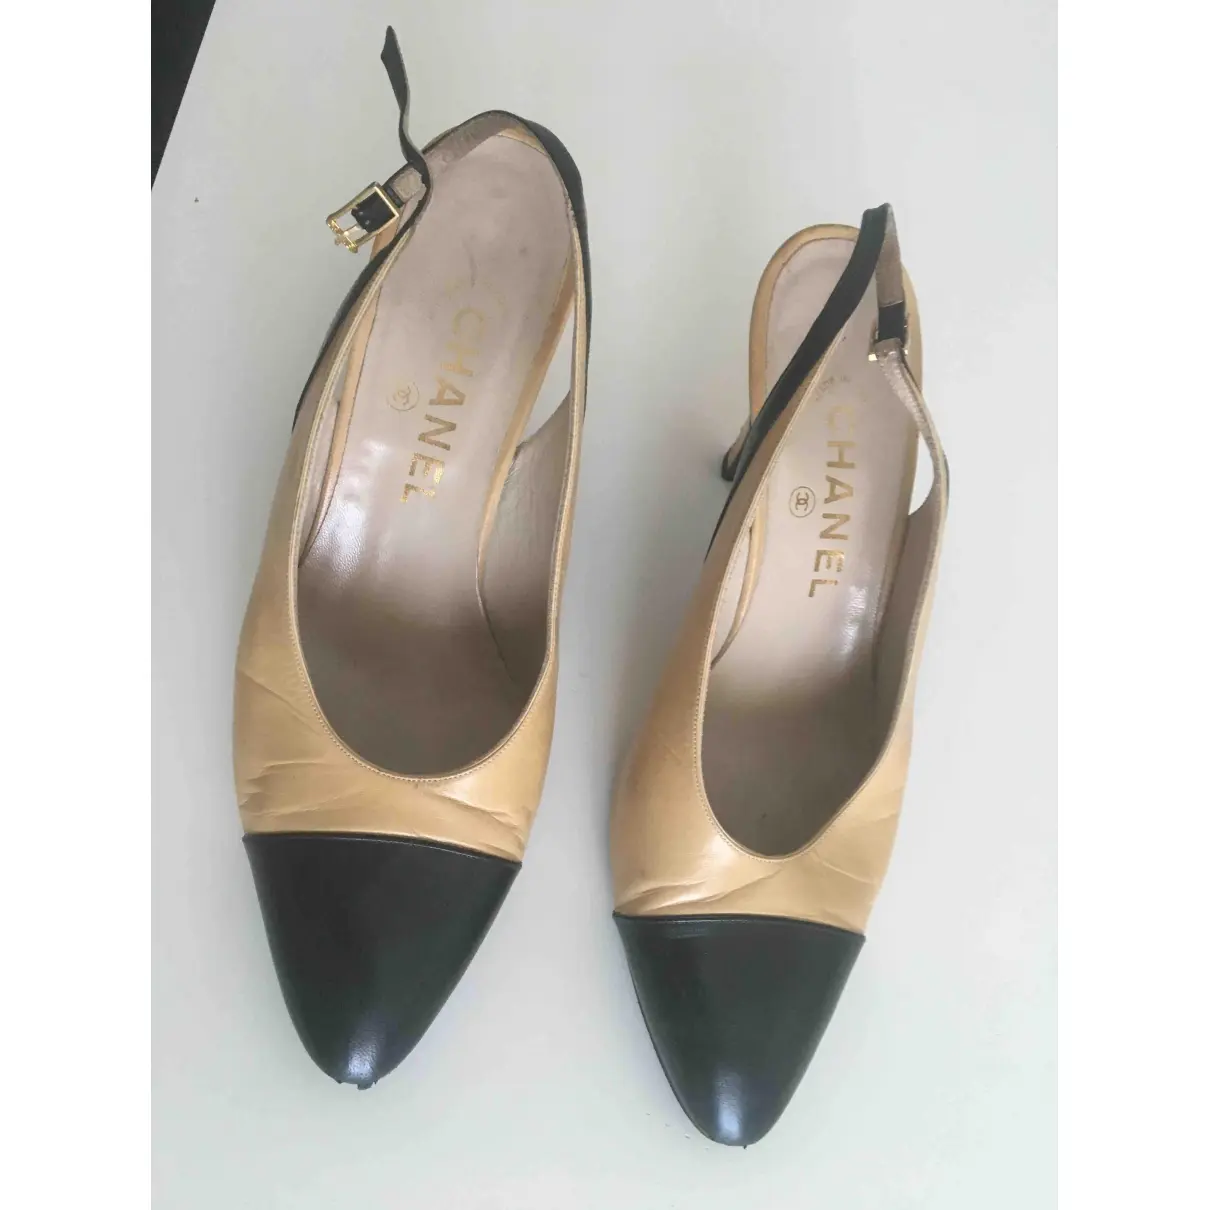 Buy Chanel Slingback leather heels online